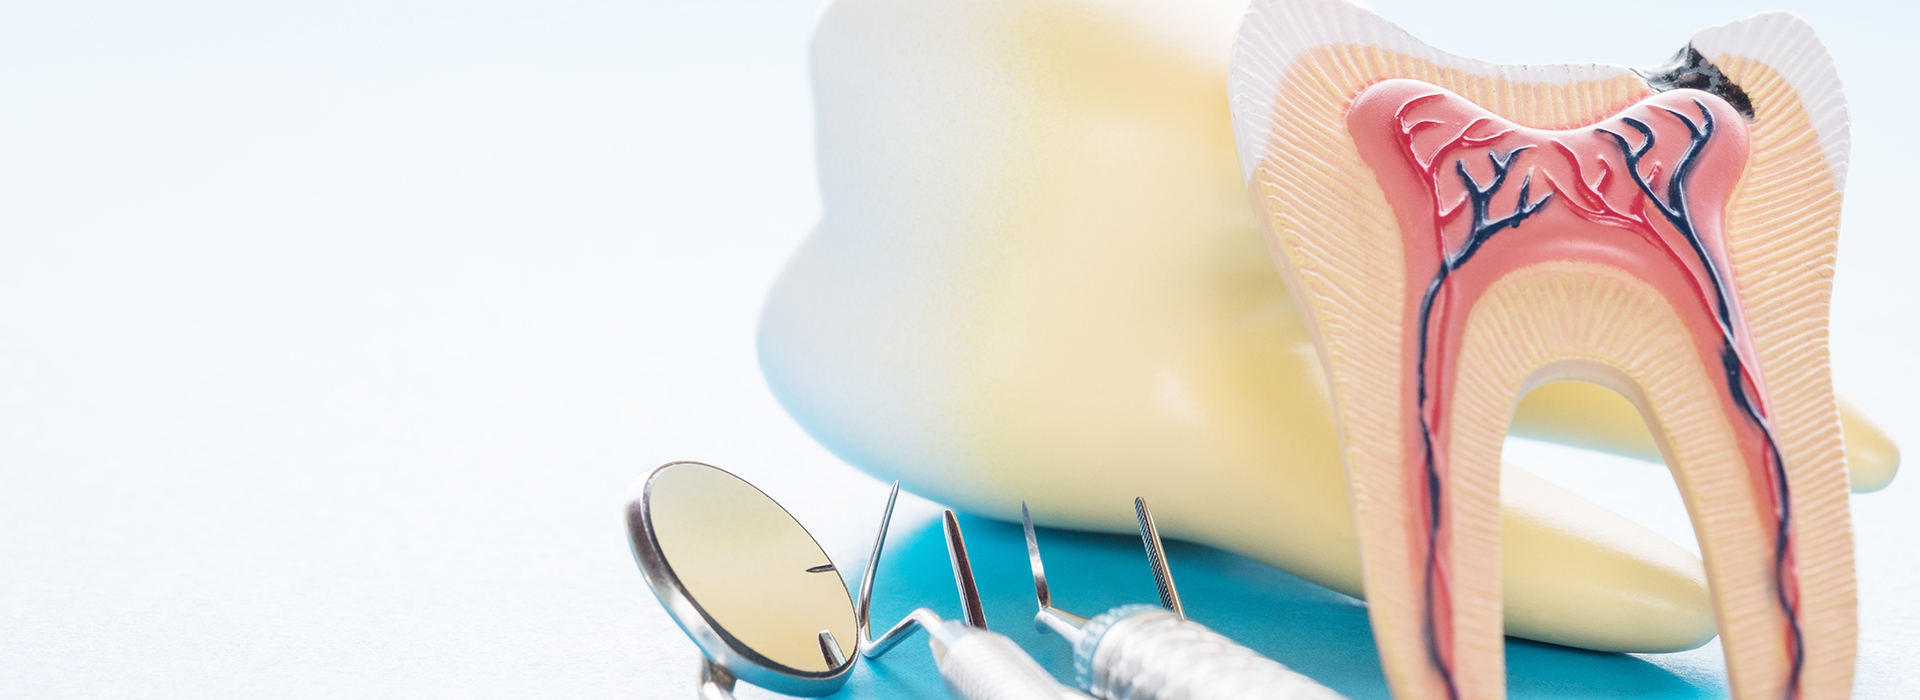 Advanced Dental Care | Preventative Program, Cosmetic Dentistry and Oral Exams